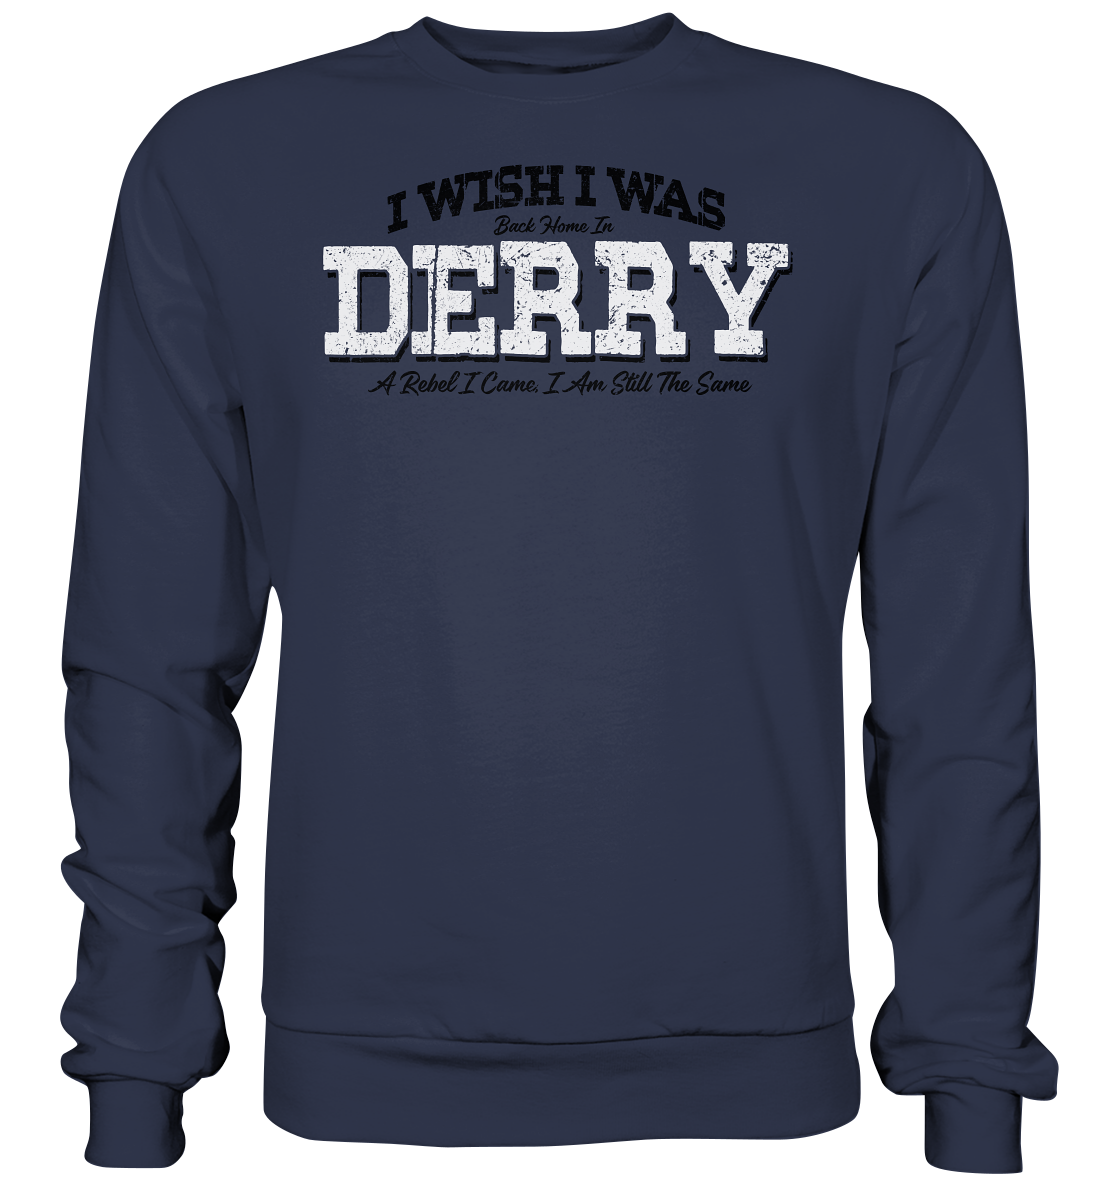 I Wish I Was Back Home In Derry - Premium Sweatshirt